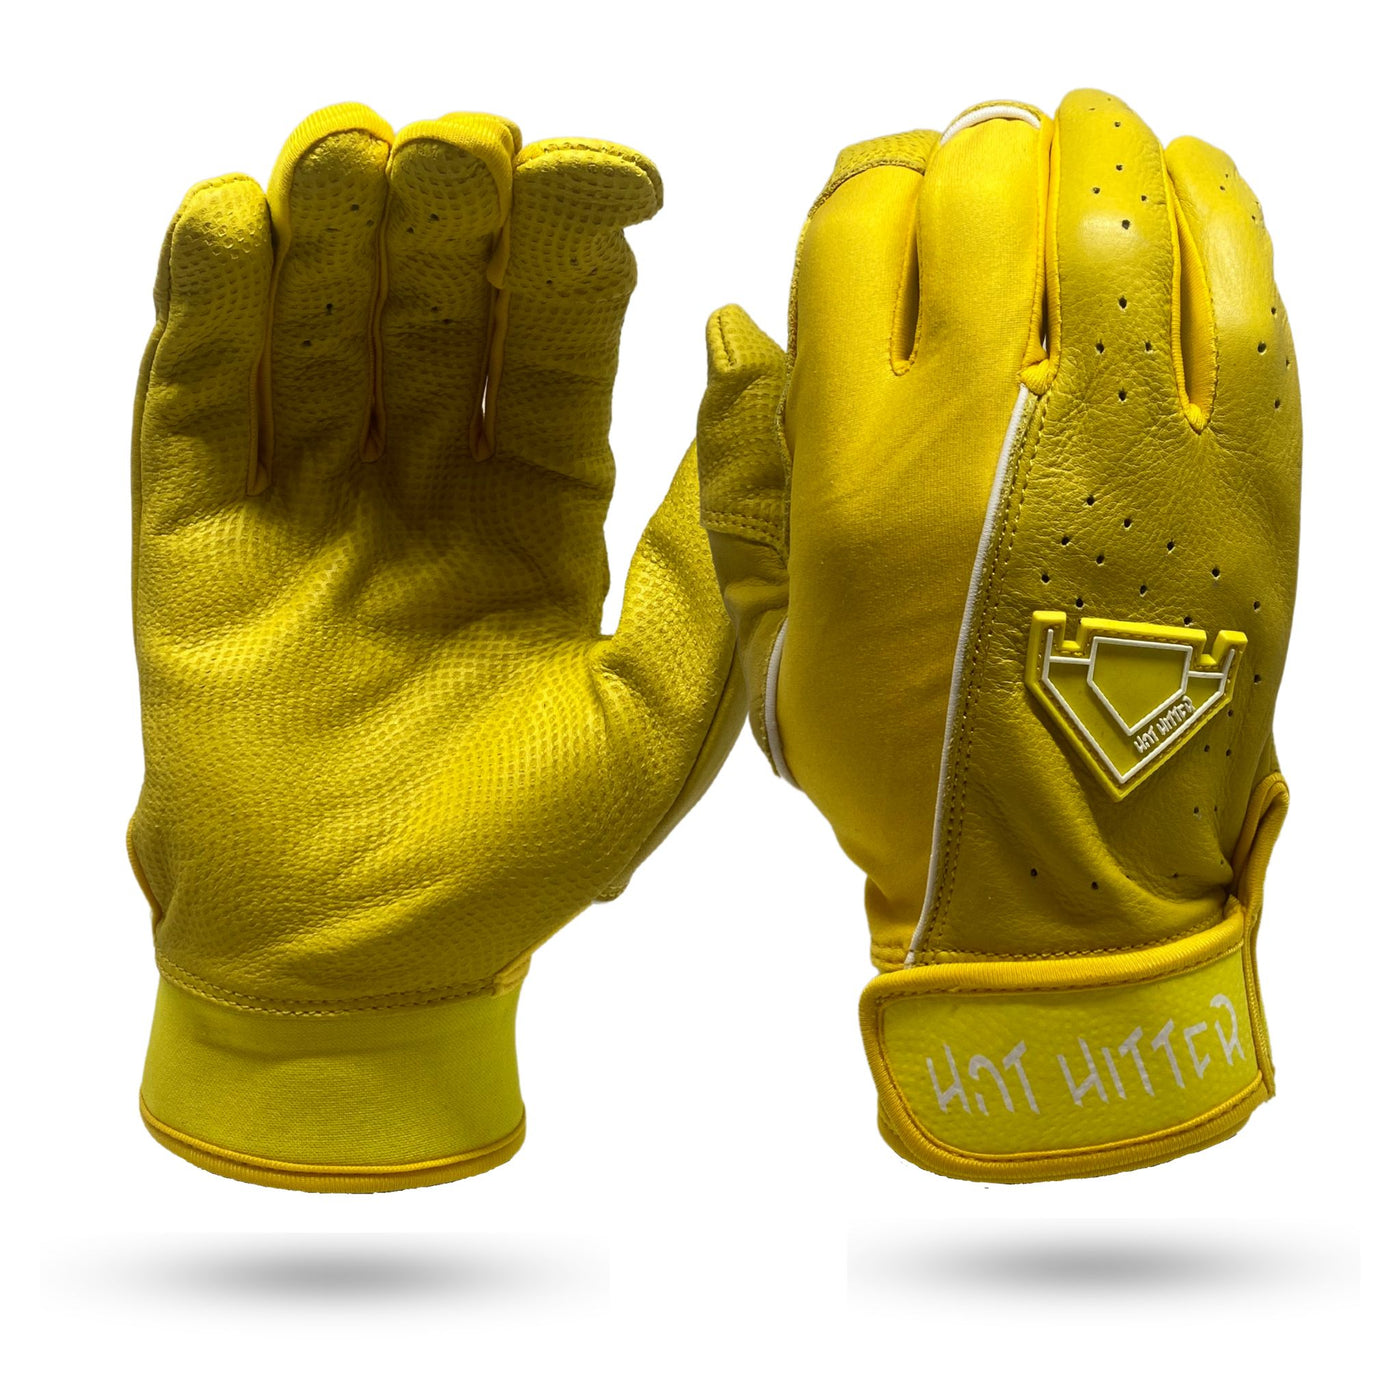 Extra Innings Batting Gloves Yellow & White